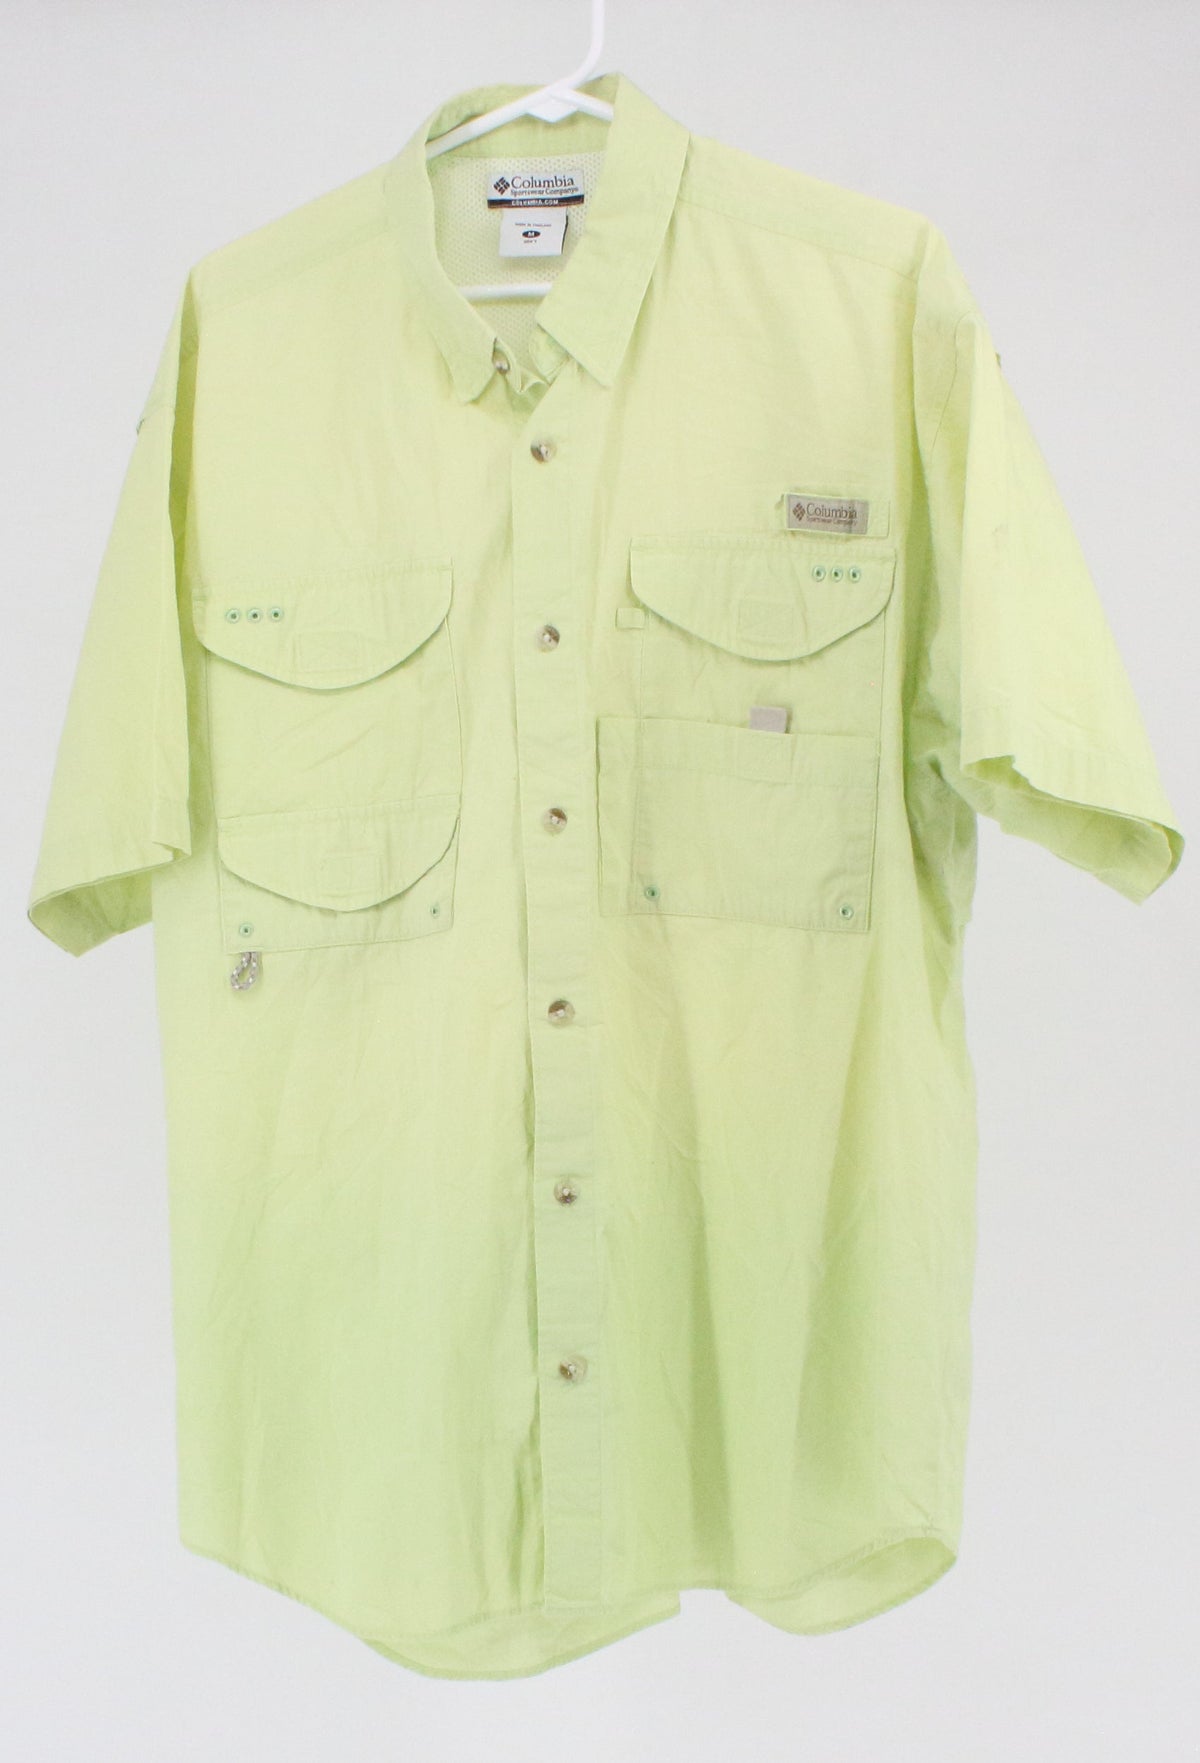 Columbia Sportswear Company Green Cargo Half Sleeve Shirt